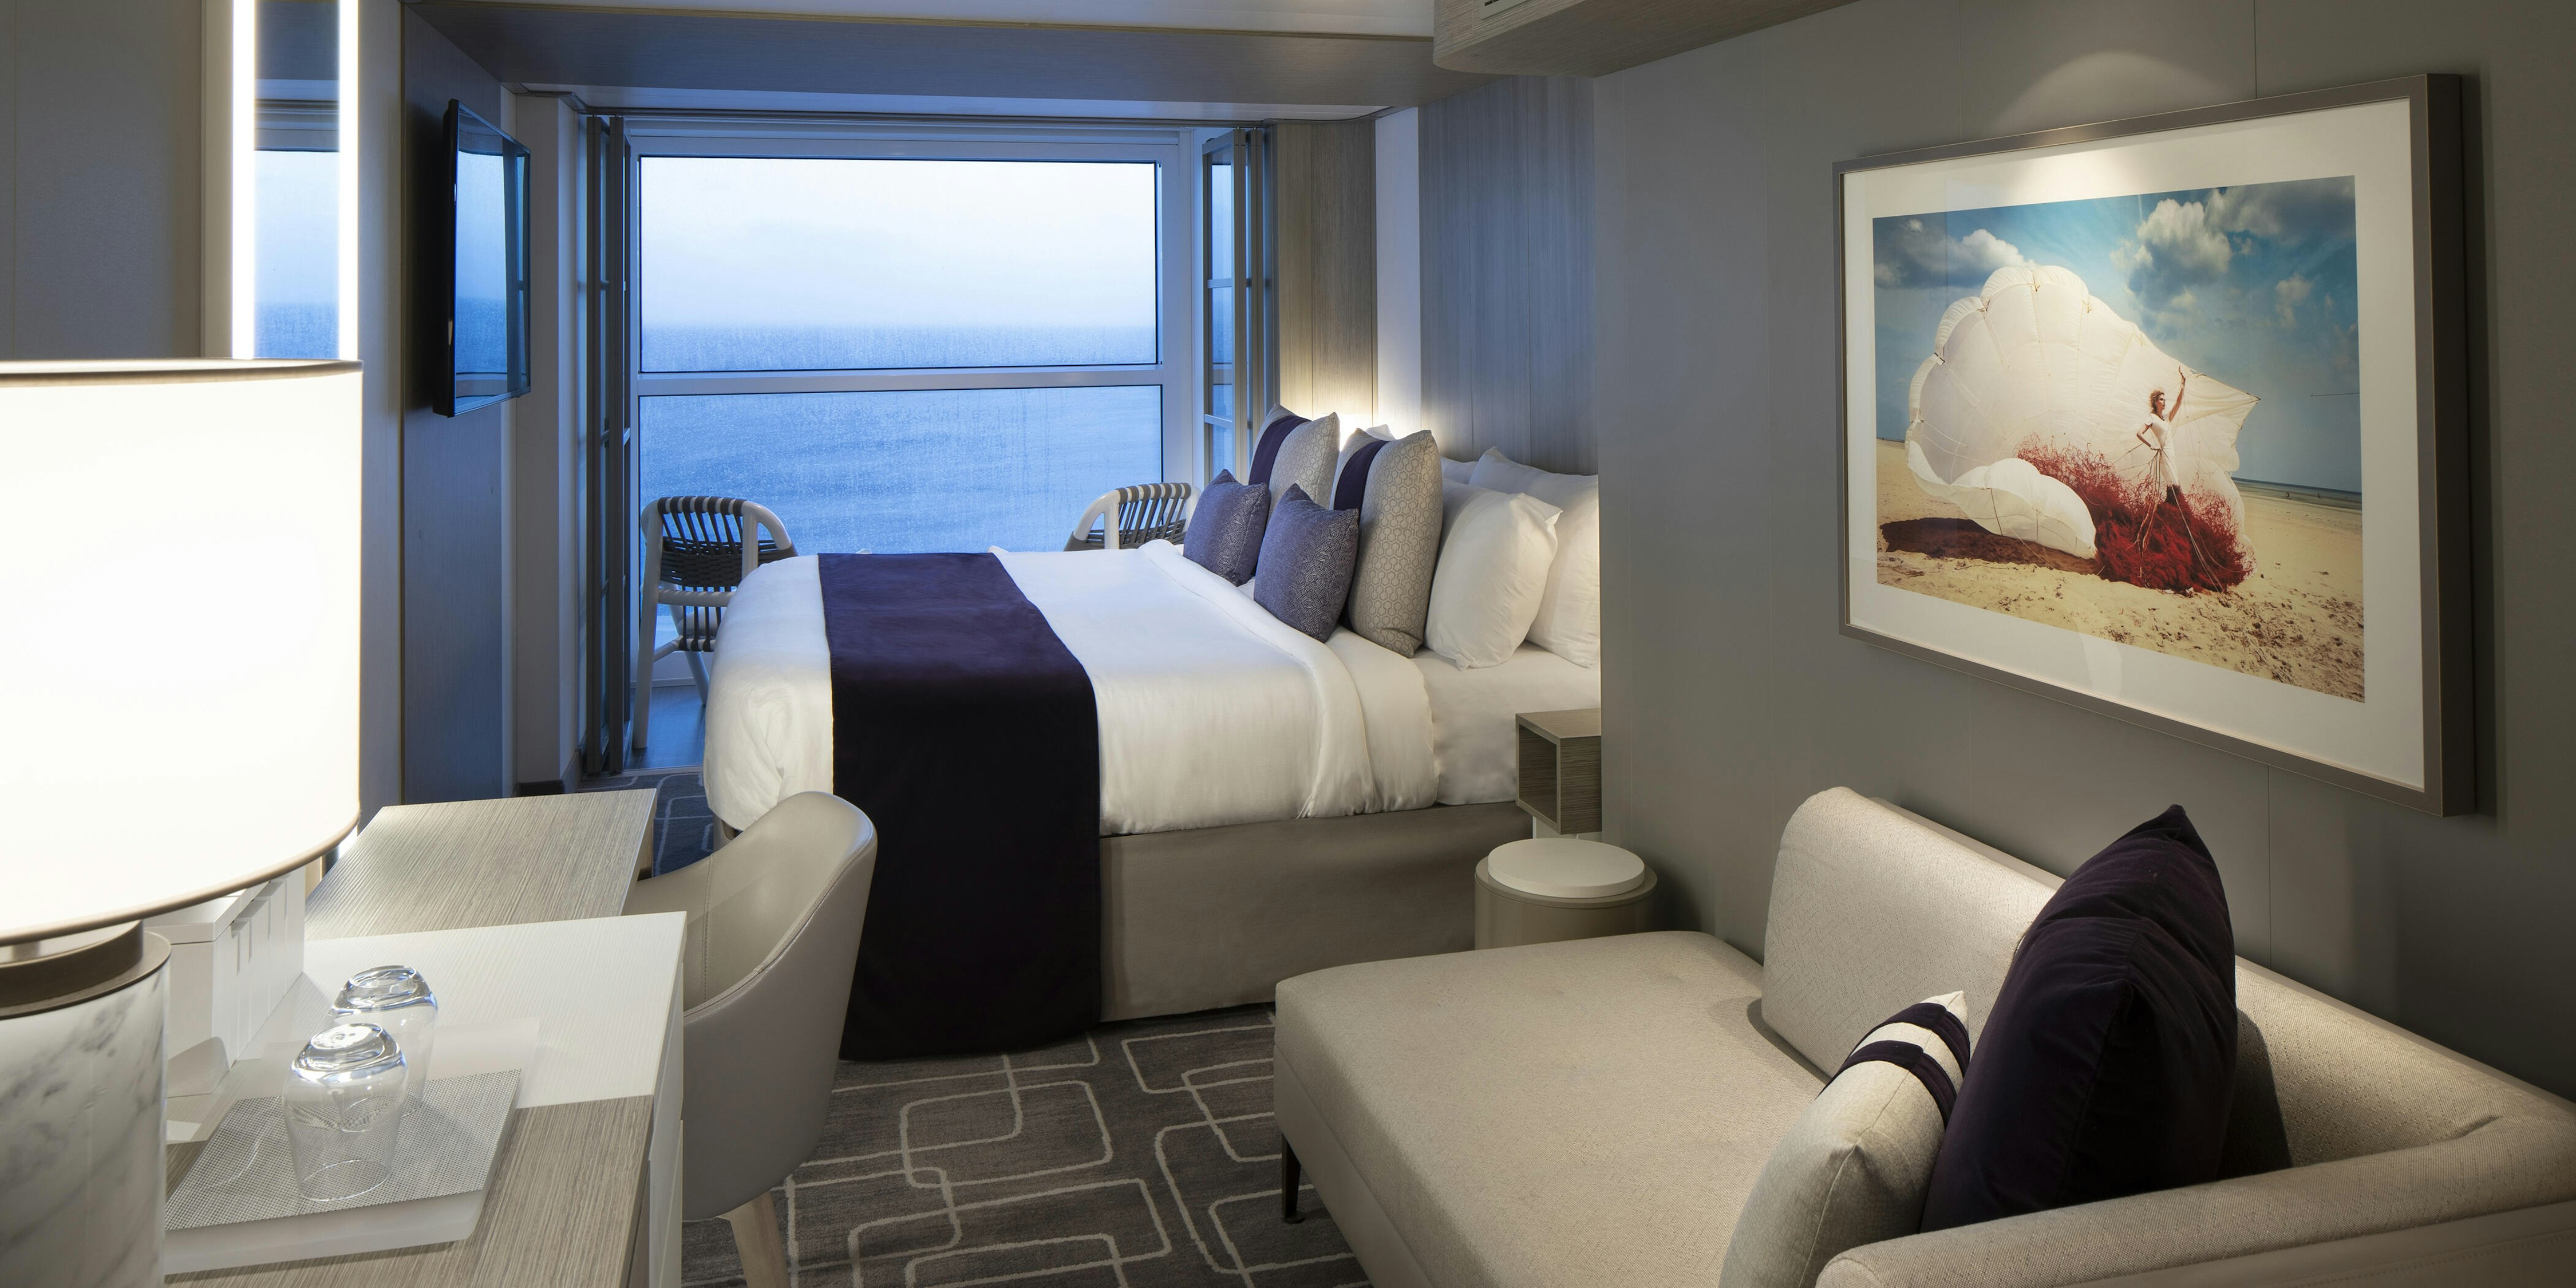 cruise ship cabin with balcony